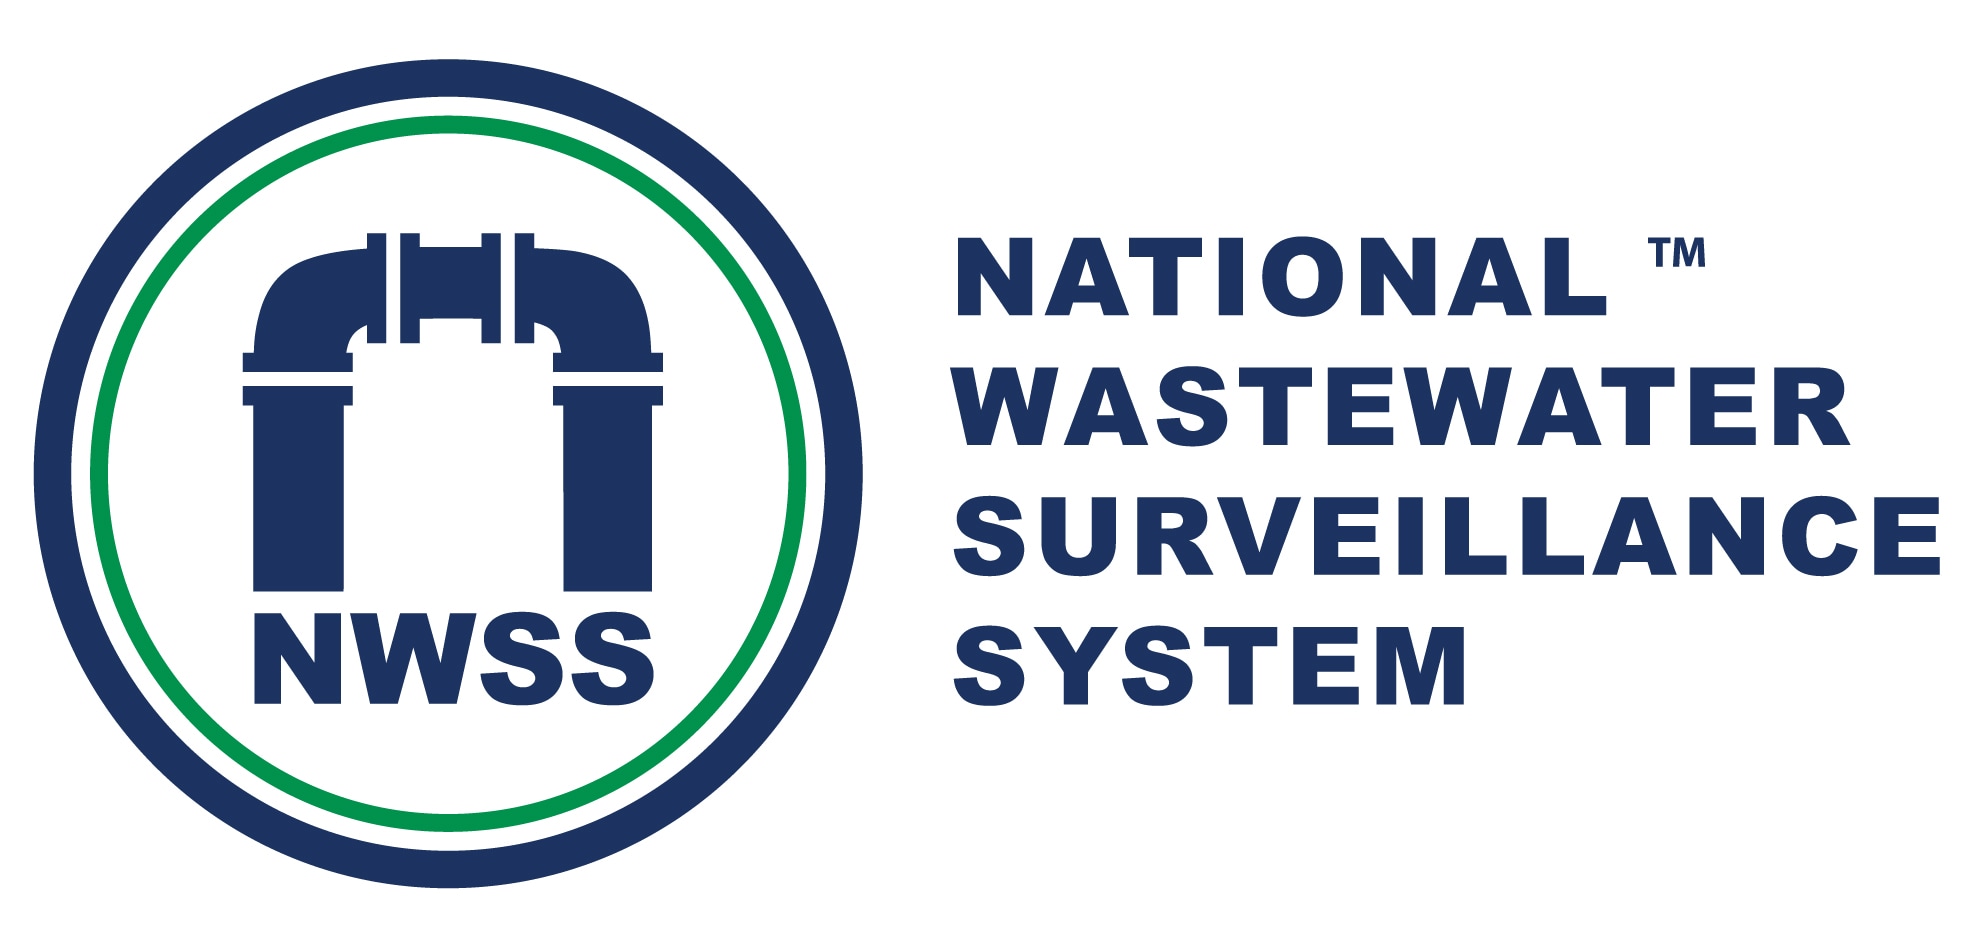 National Wastewater Surveillance System